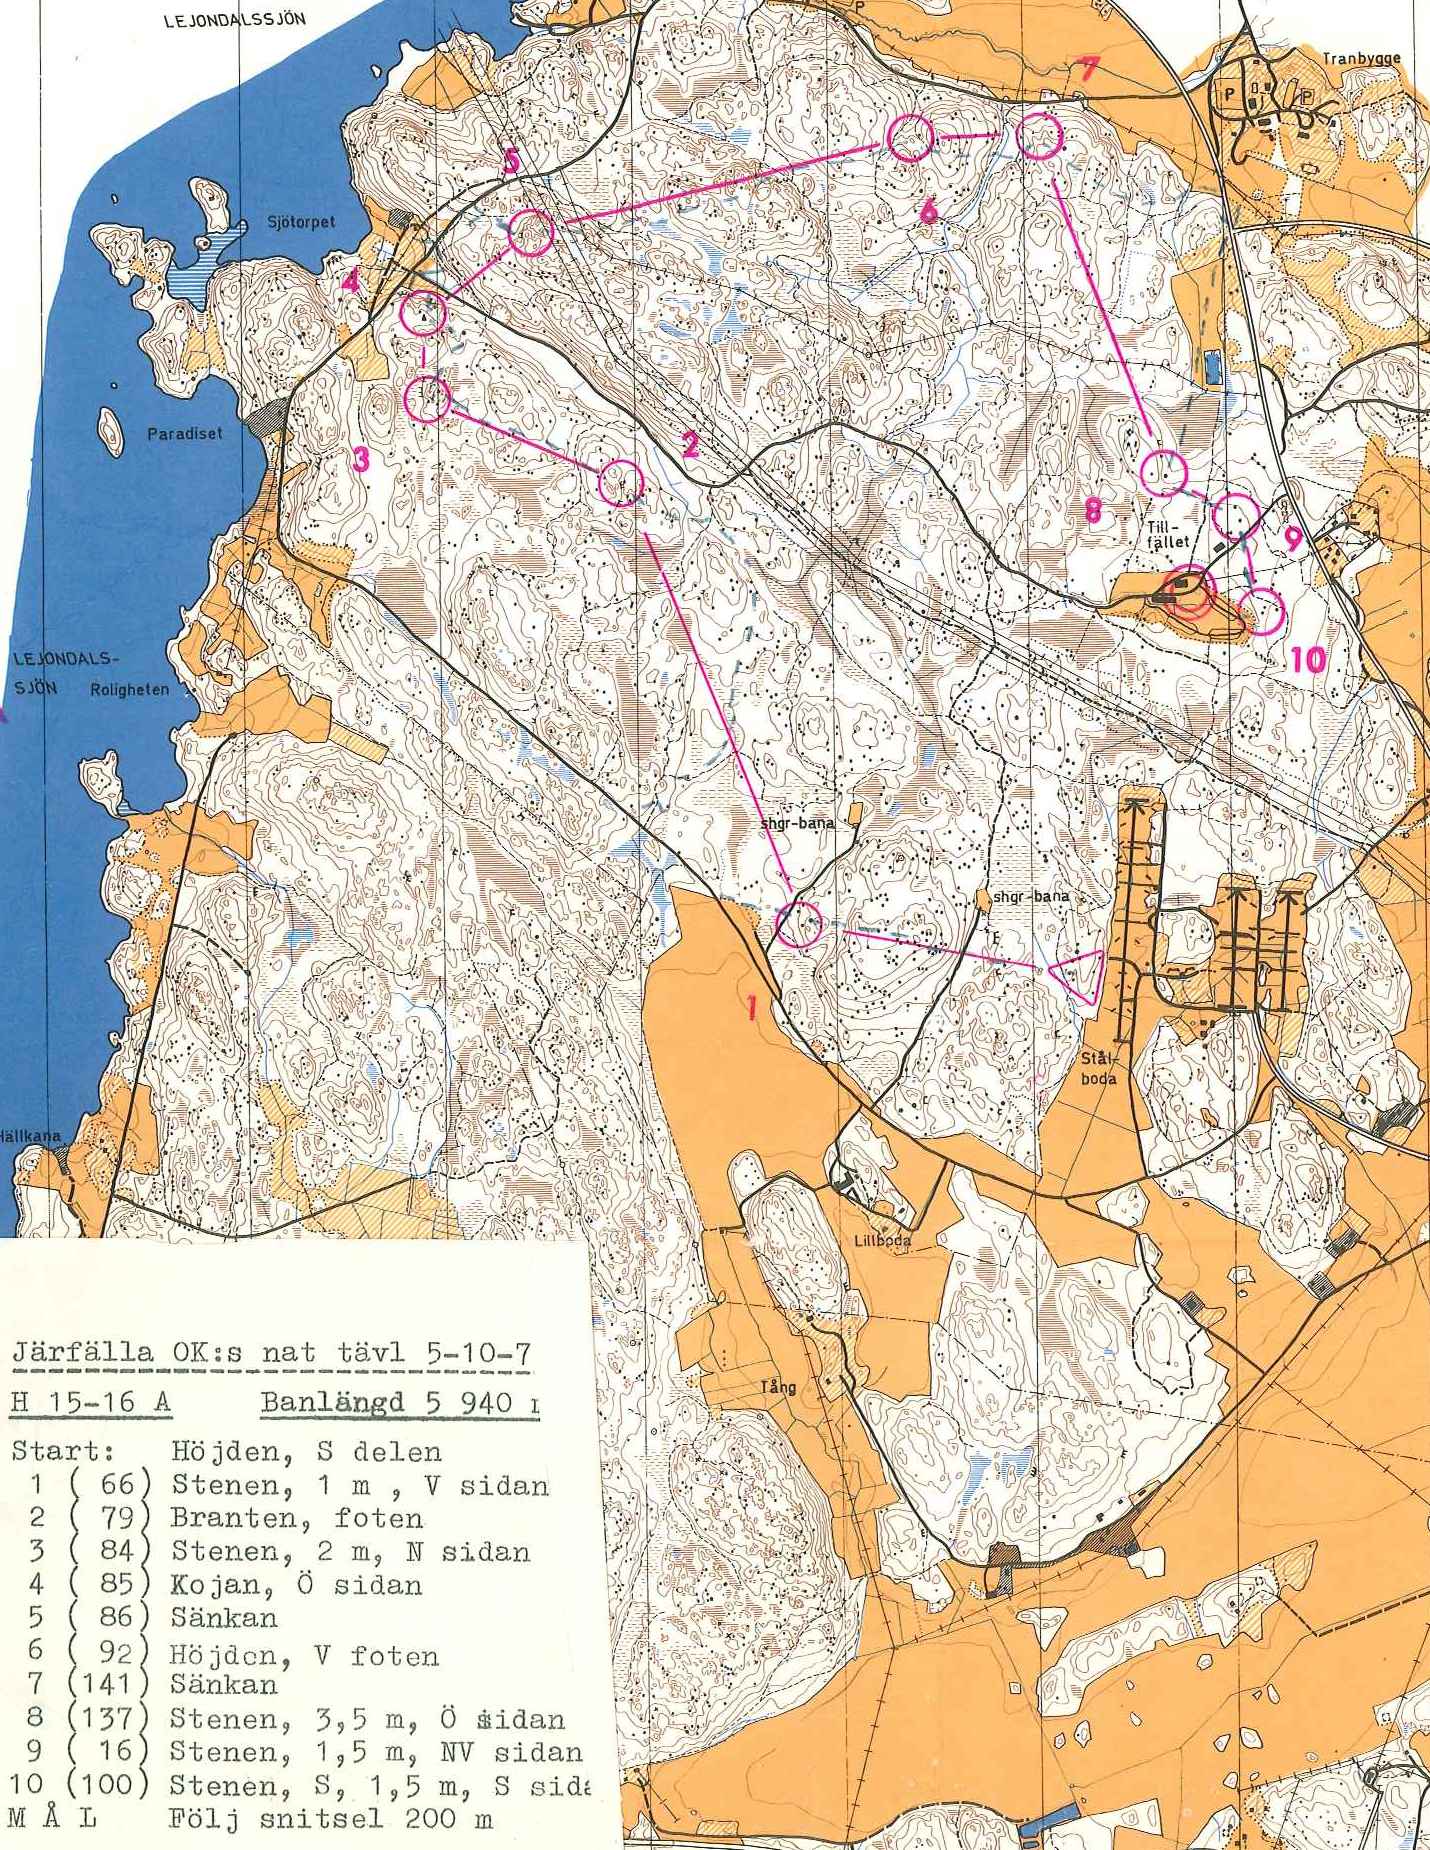 Järfälla (1975-10-05)